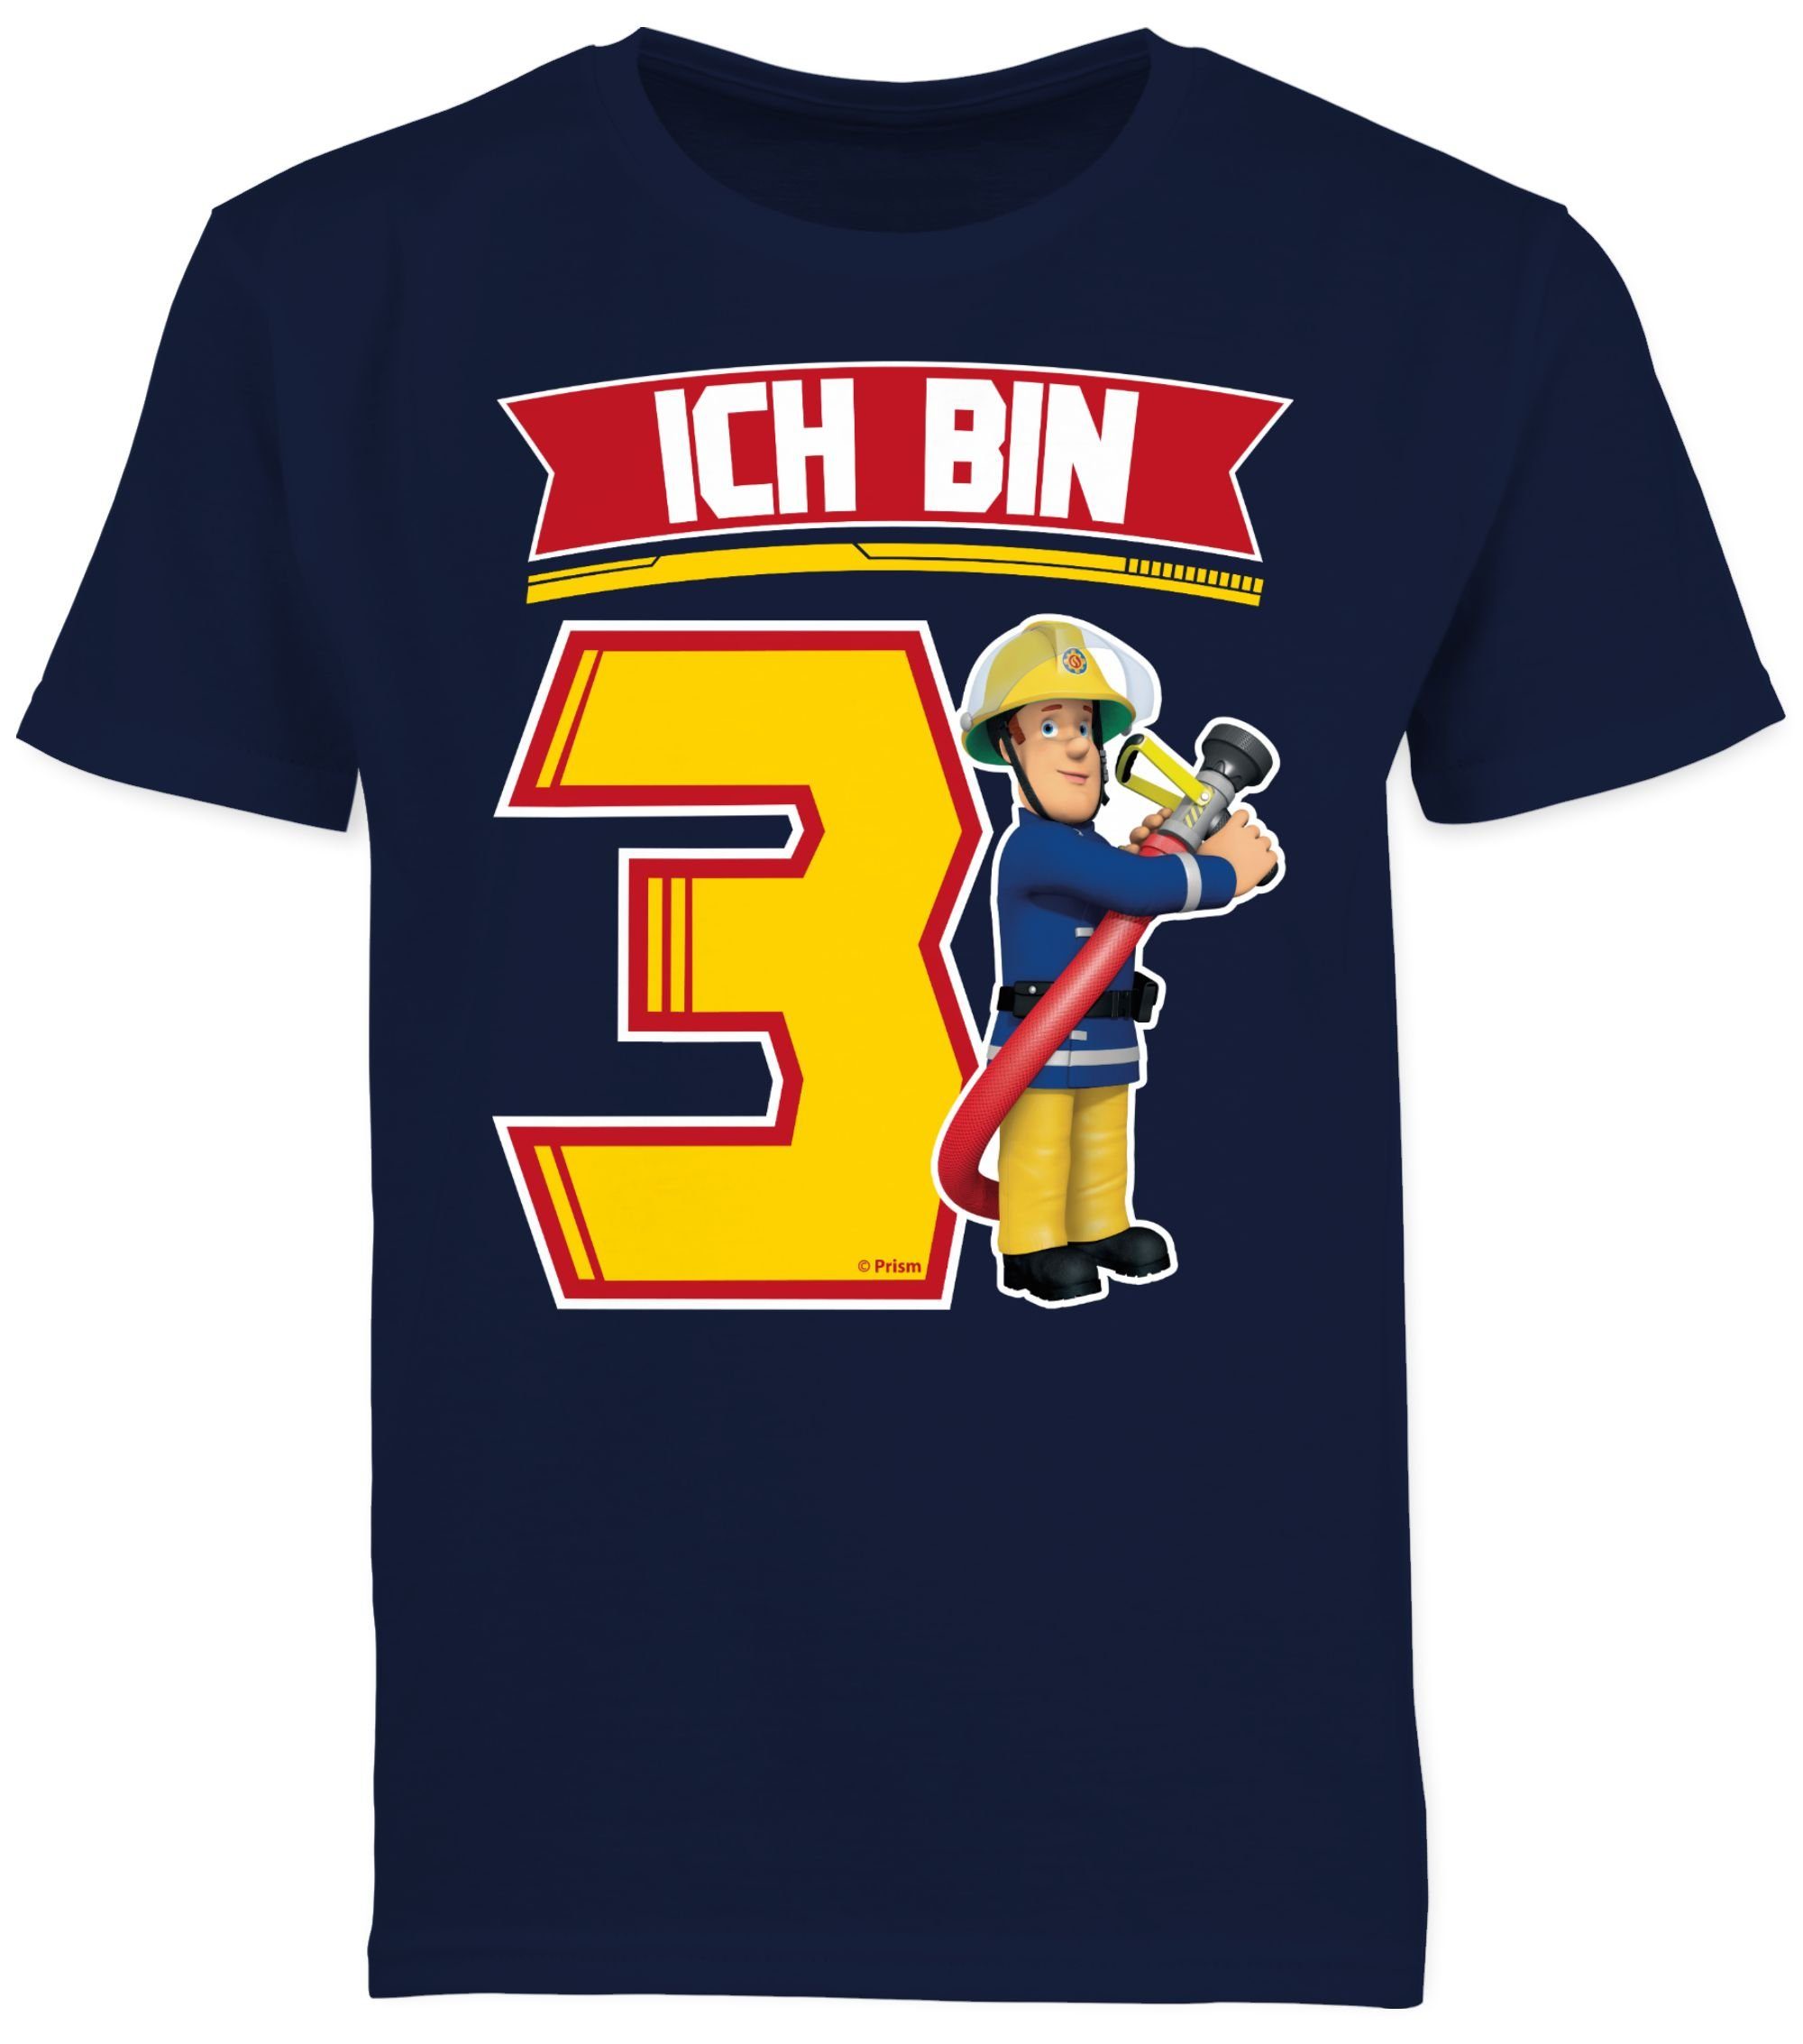 01 Shirtracer Feuerwehrmann Ich Sam Sam 3 bin - Dunkelblau T-Shirt Jungen